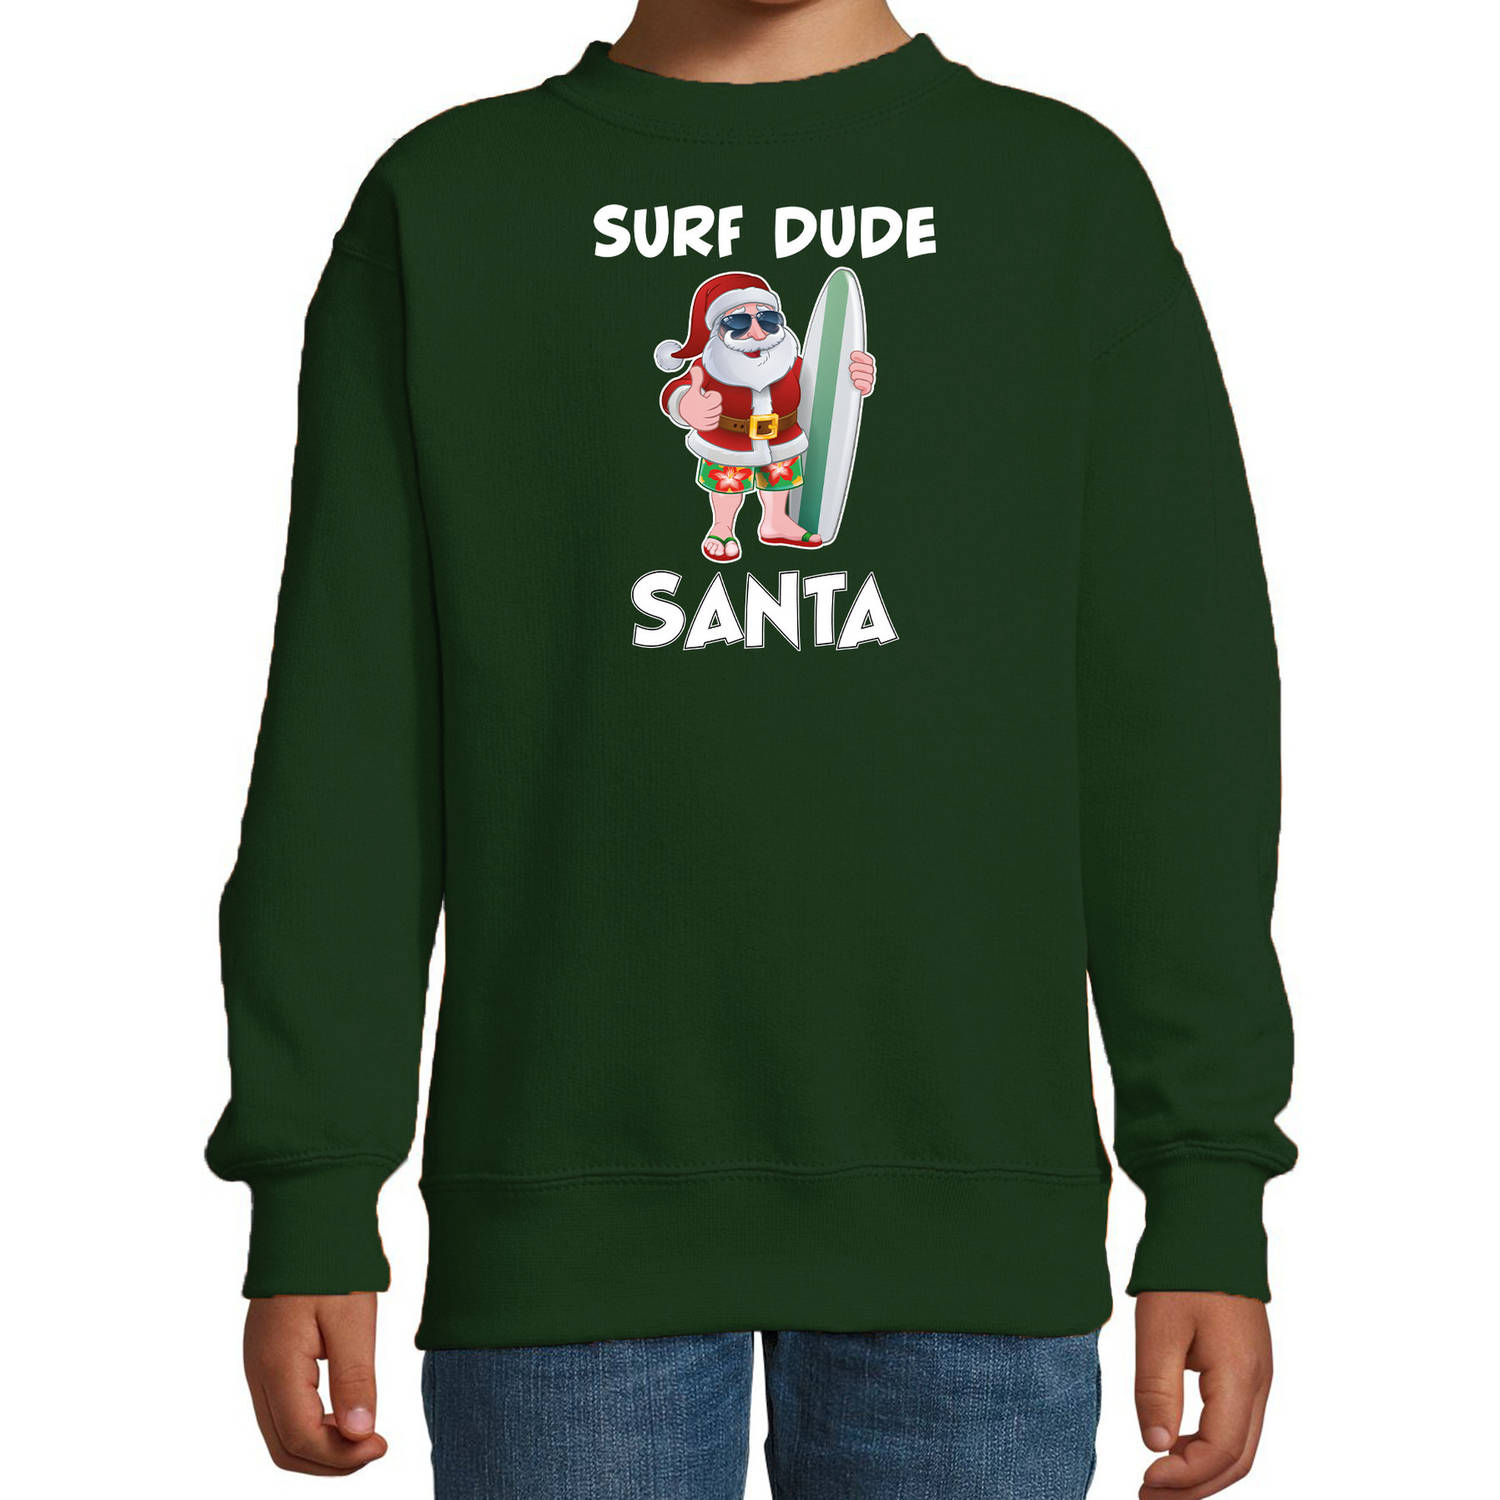 Groene Kersttrui / Kerstkleding surf dude Santa voor kinderen 7-8 jaar (122/128) - kerst truien kind